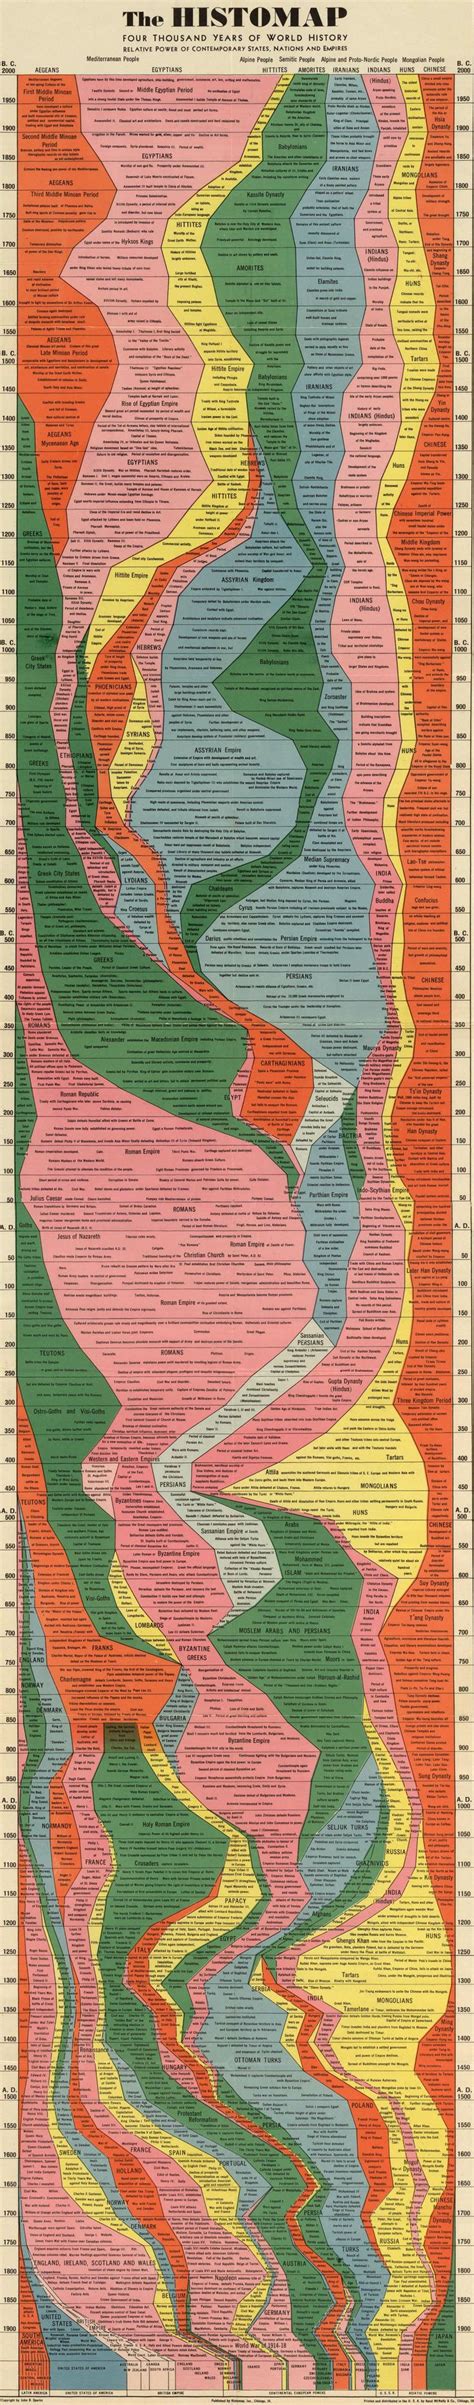 The Histomap By John Sparks World History Charts